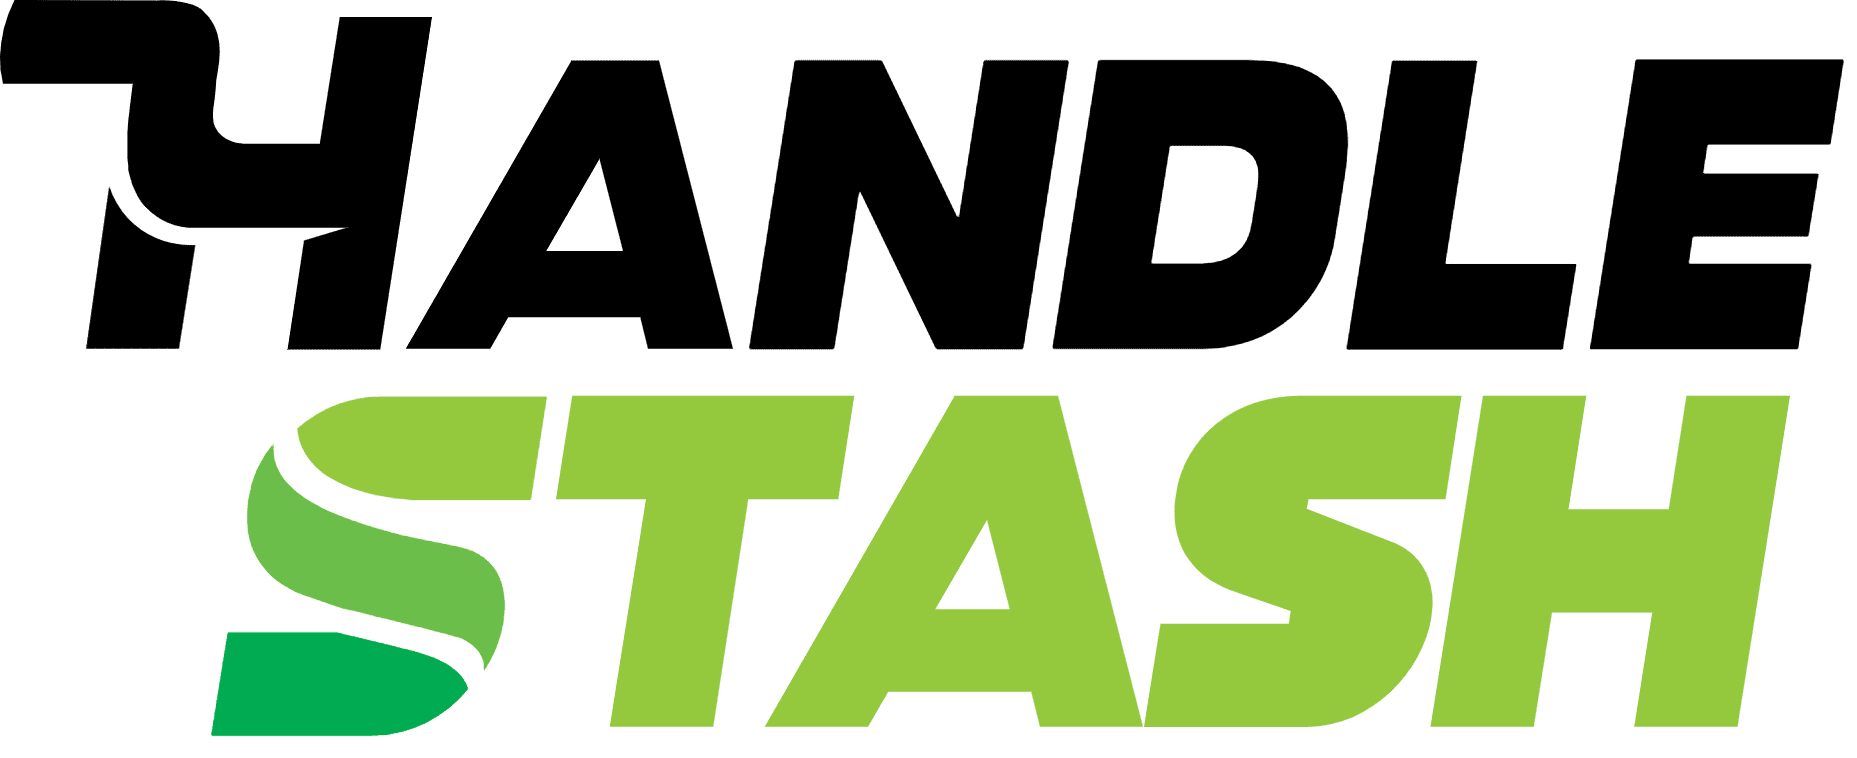 Exhibiting Companies - HandleStash Logo Black No Text Adam Saplin